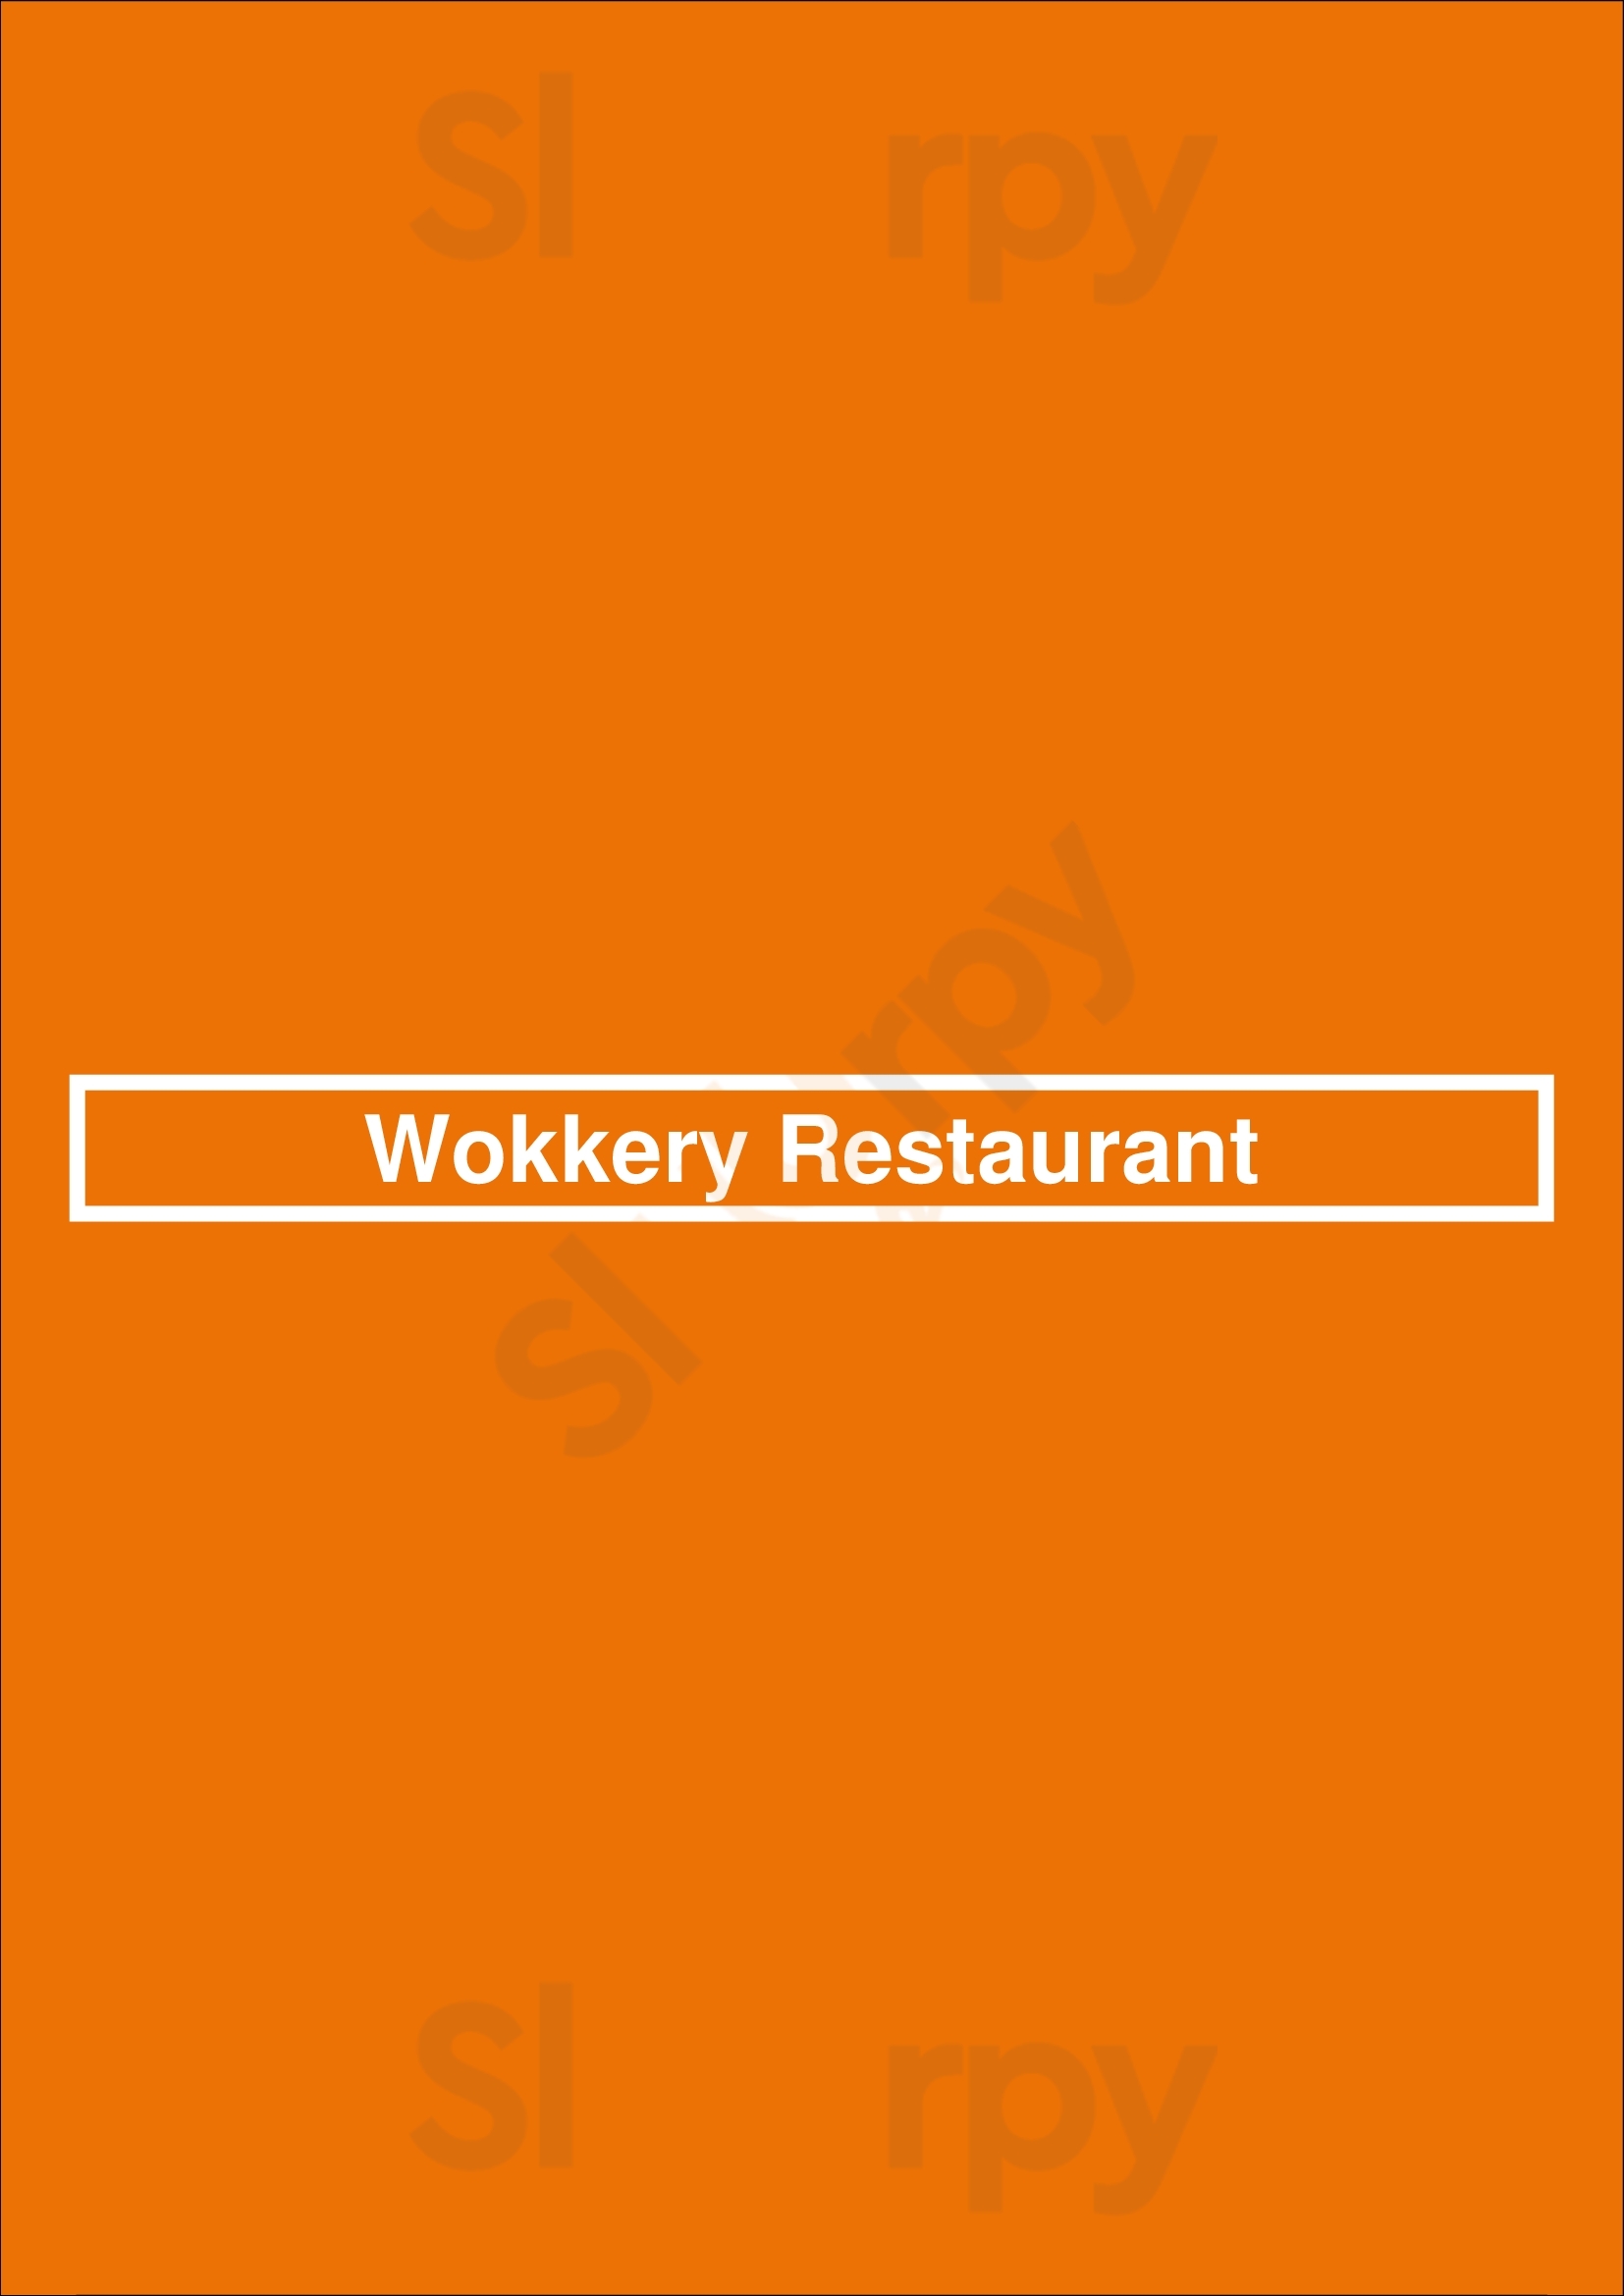 Wokkery Restaurant Edmonton Menu - 1